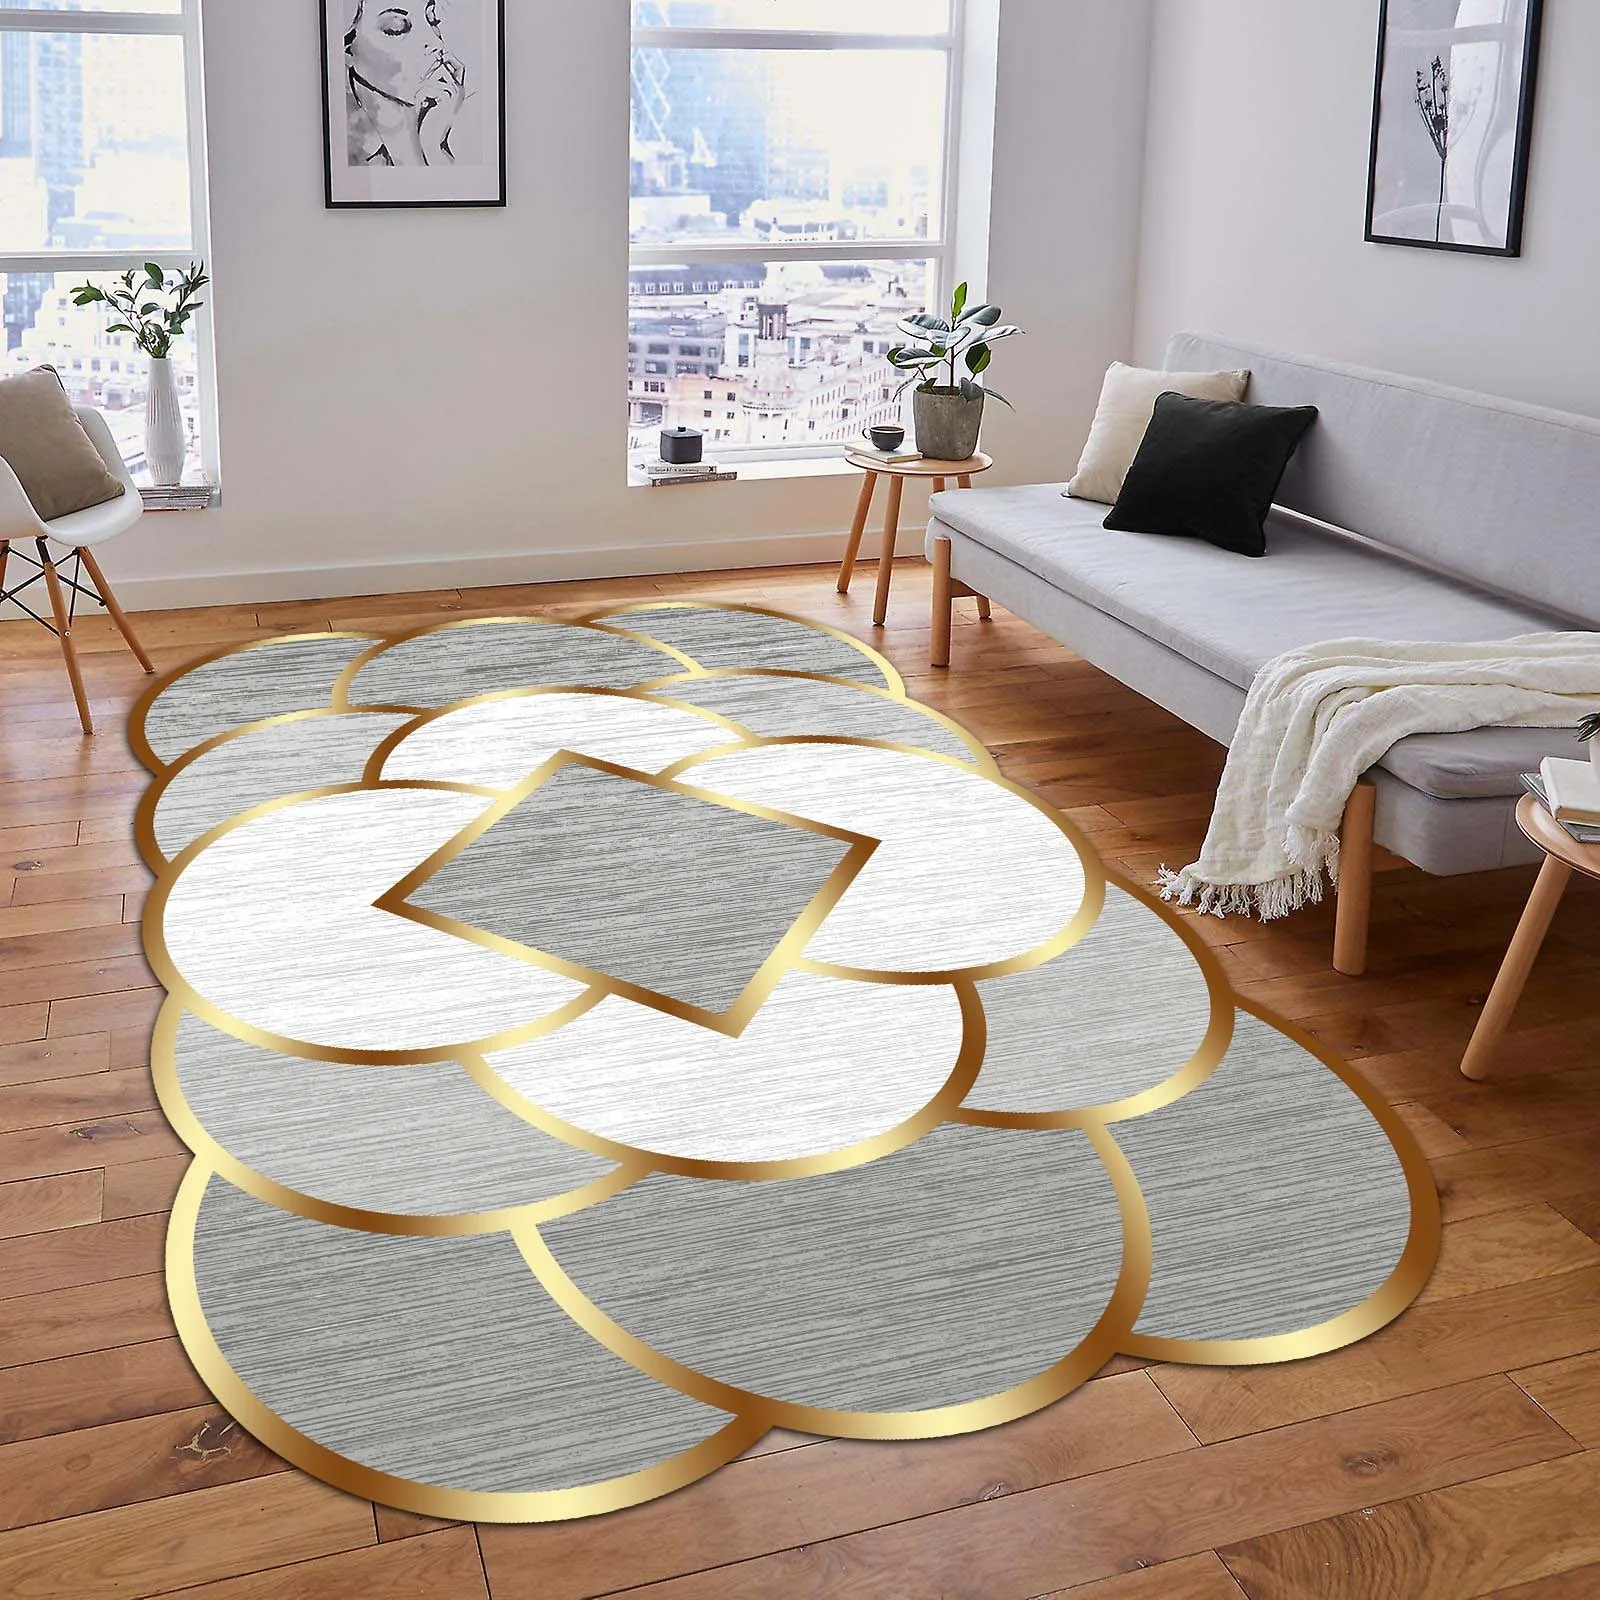 MS1000 Decorative Carpet Non-Slip Base Rug Fabric Kitchen Livingroom Accessory M 